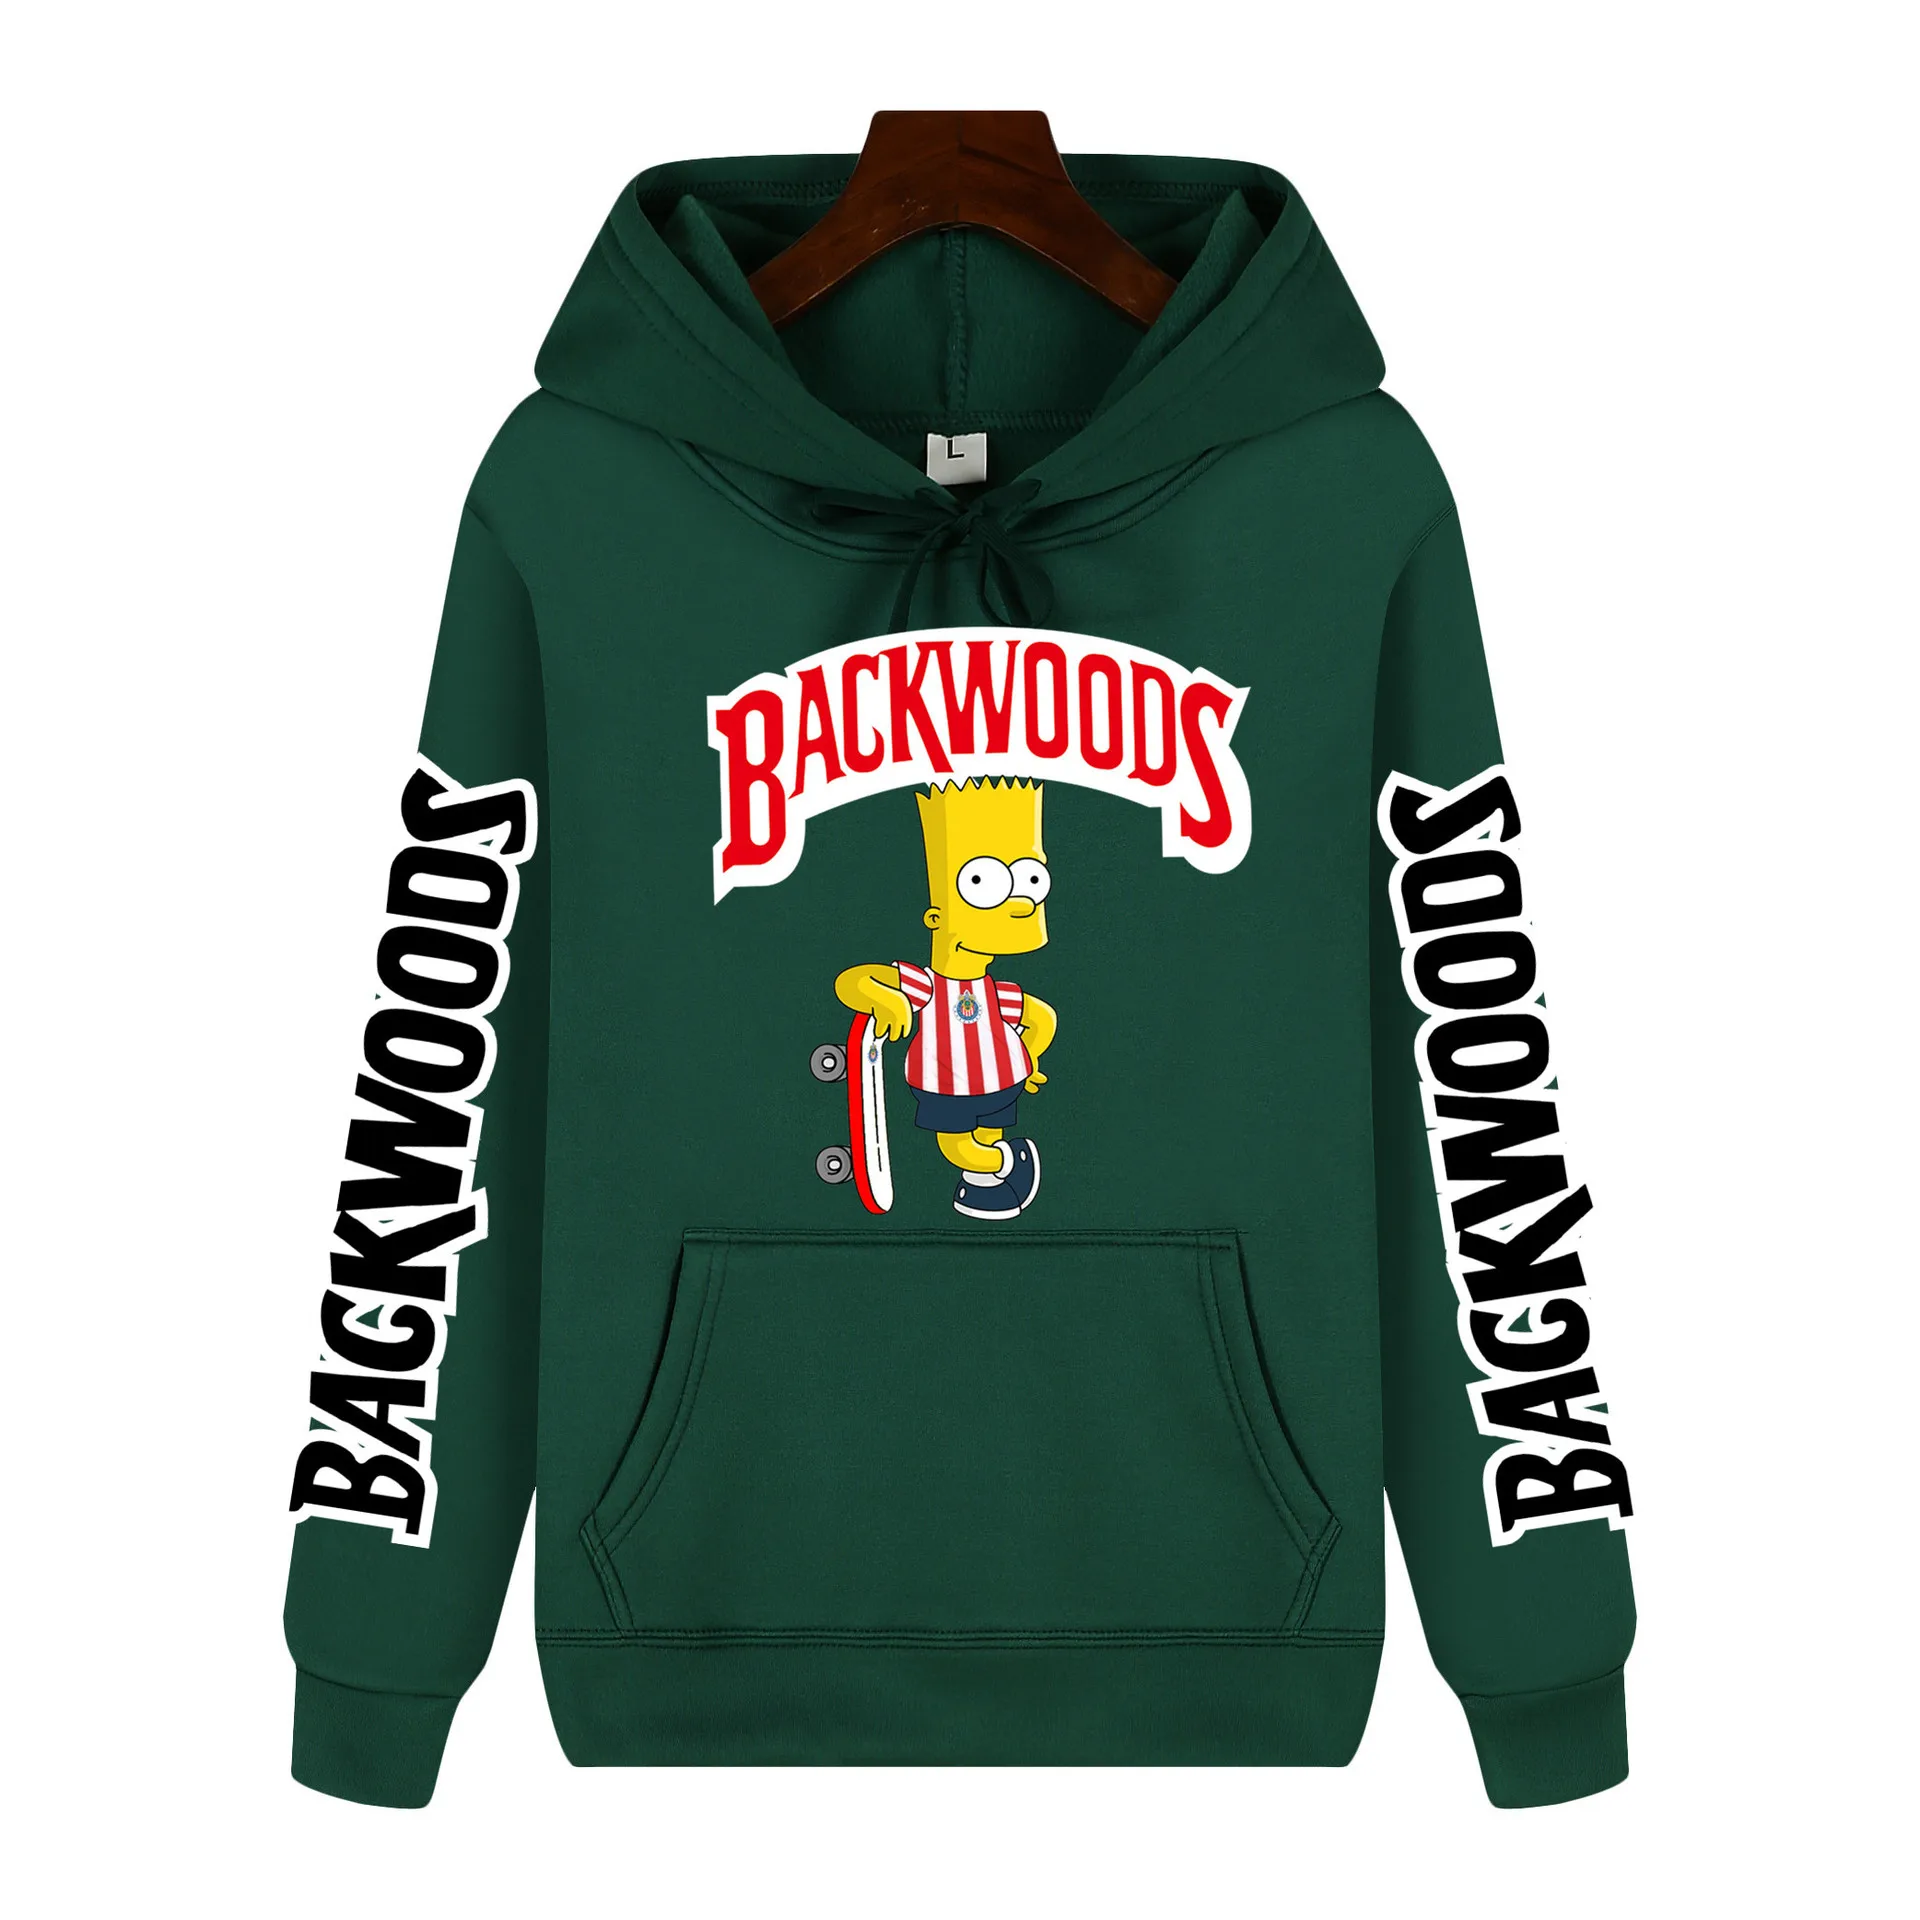 Personalized Wholesale Unisex Women Men Cookie Backwoods Oversized Hoodies Sweat Suits With Custom Logo